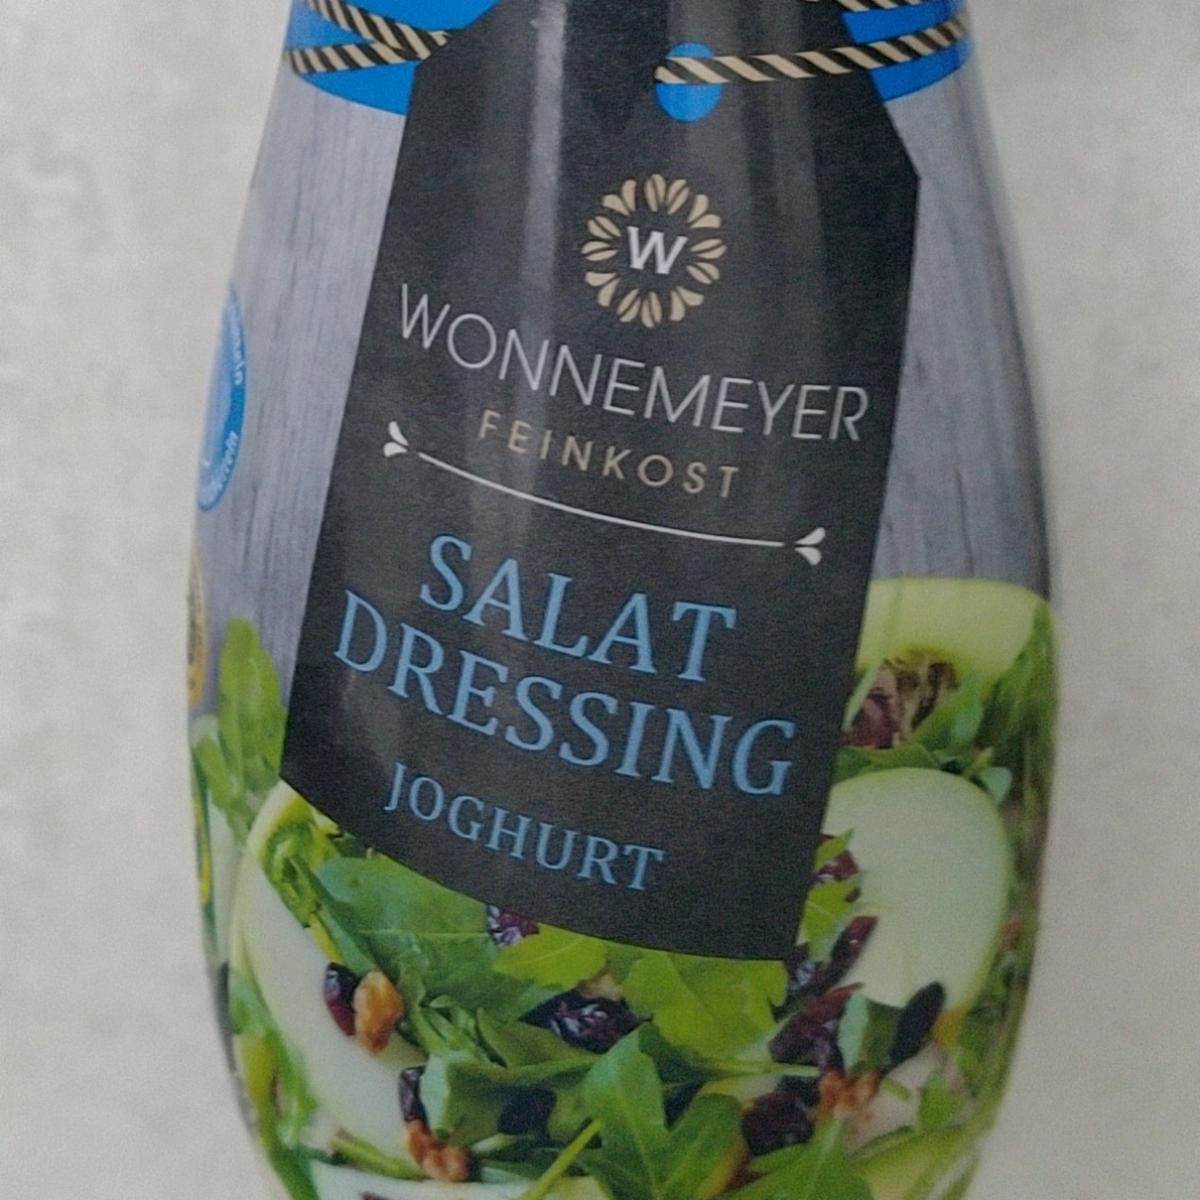 Фото - Salat Dressing Joghurt Wonnemeyer Aldi